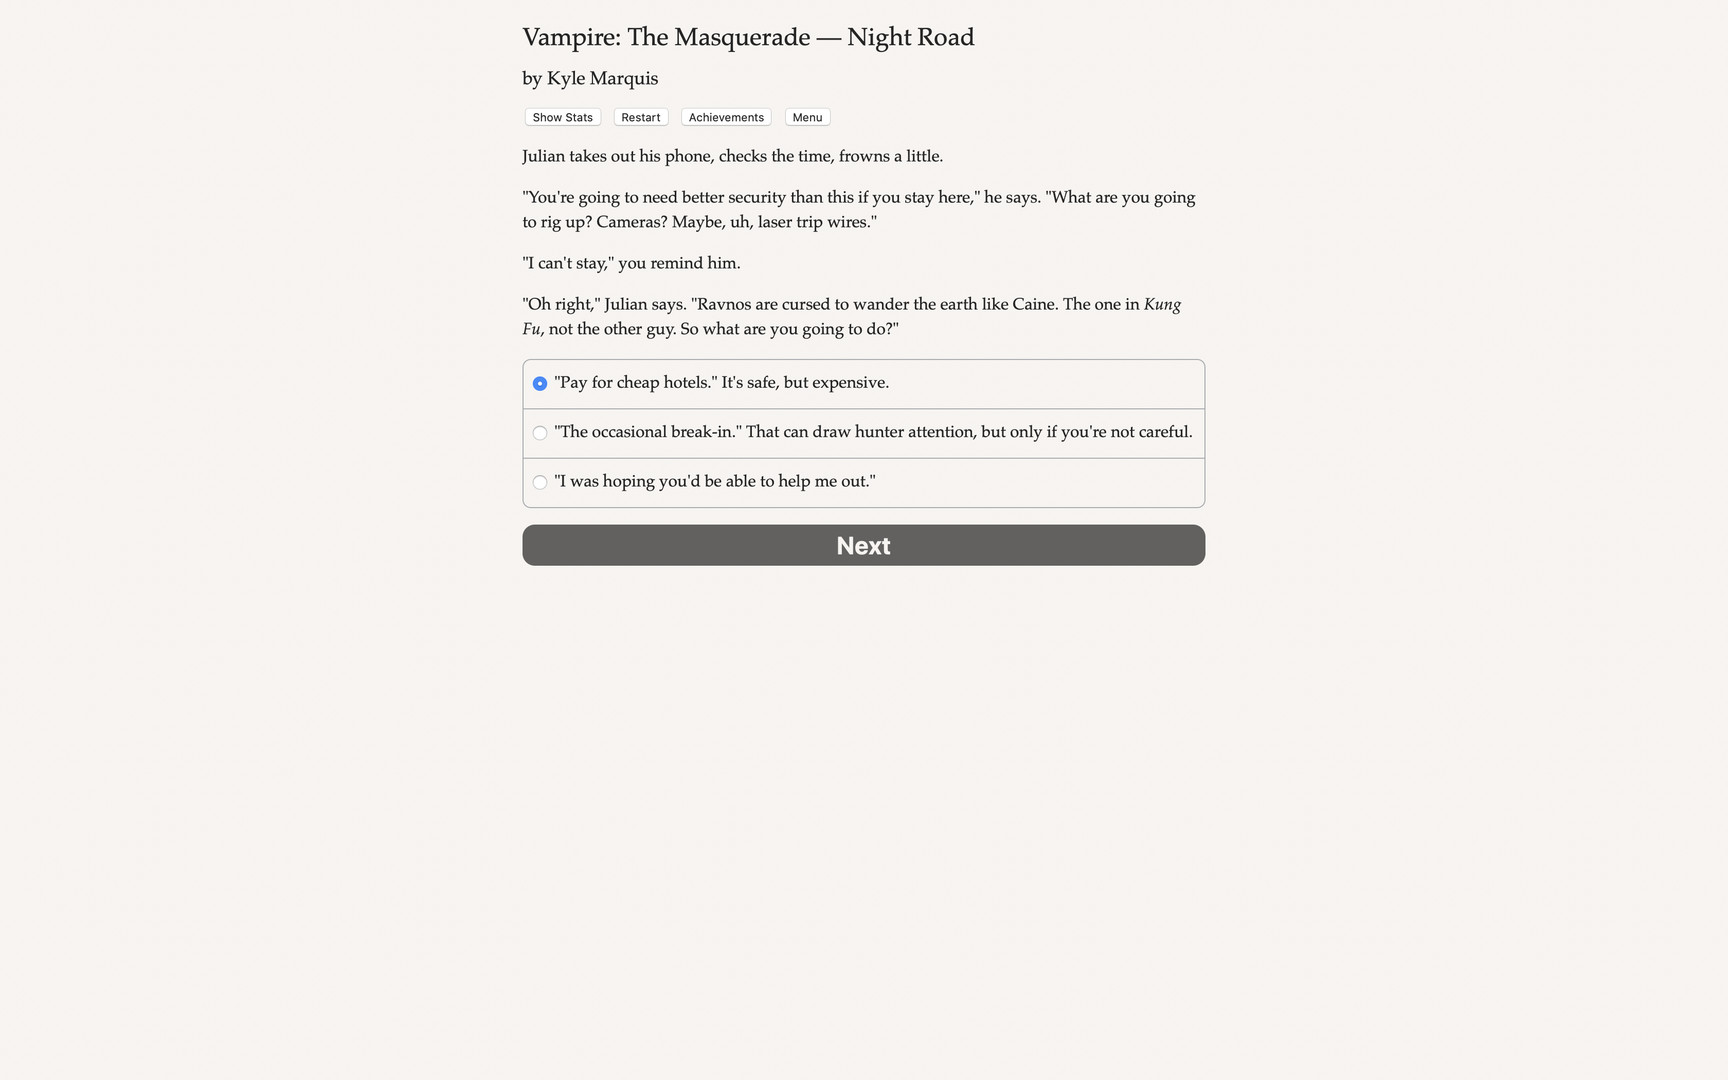 Vampire: The Masquerade — Night Road — Secrets and Shadows Featured Screenshot #1